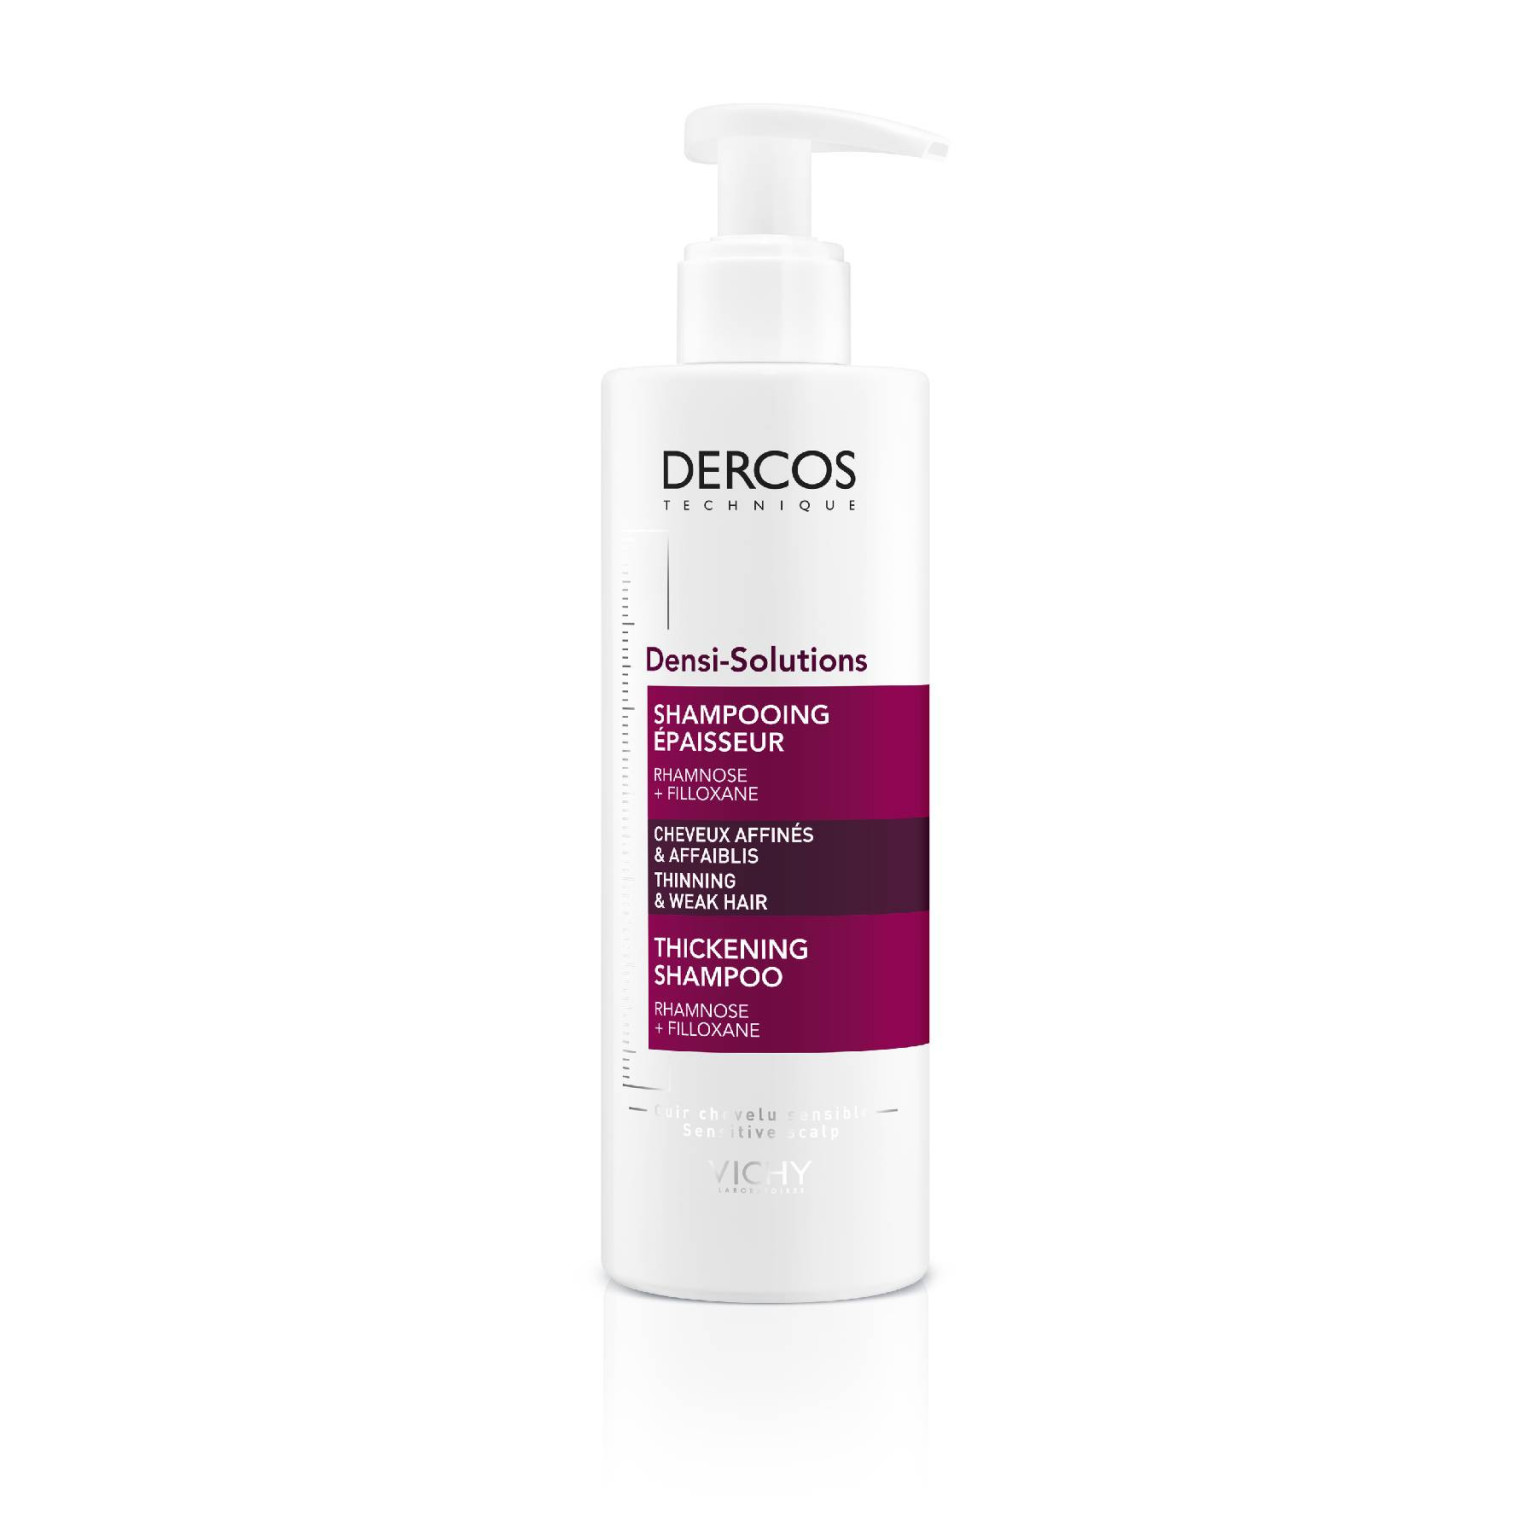 971750613 - Vichy Dercos Densi-Solutions Shampoo 250ml - 7895730_2.jpg